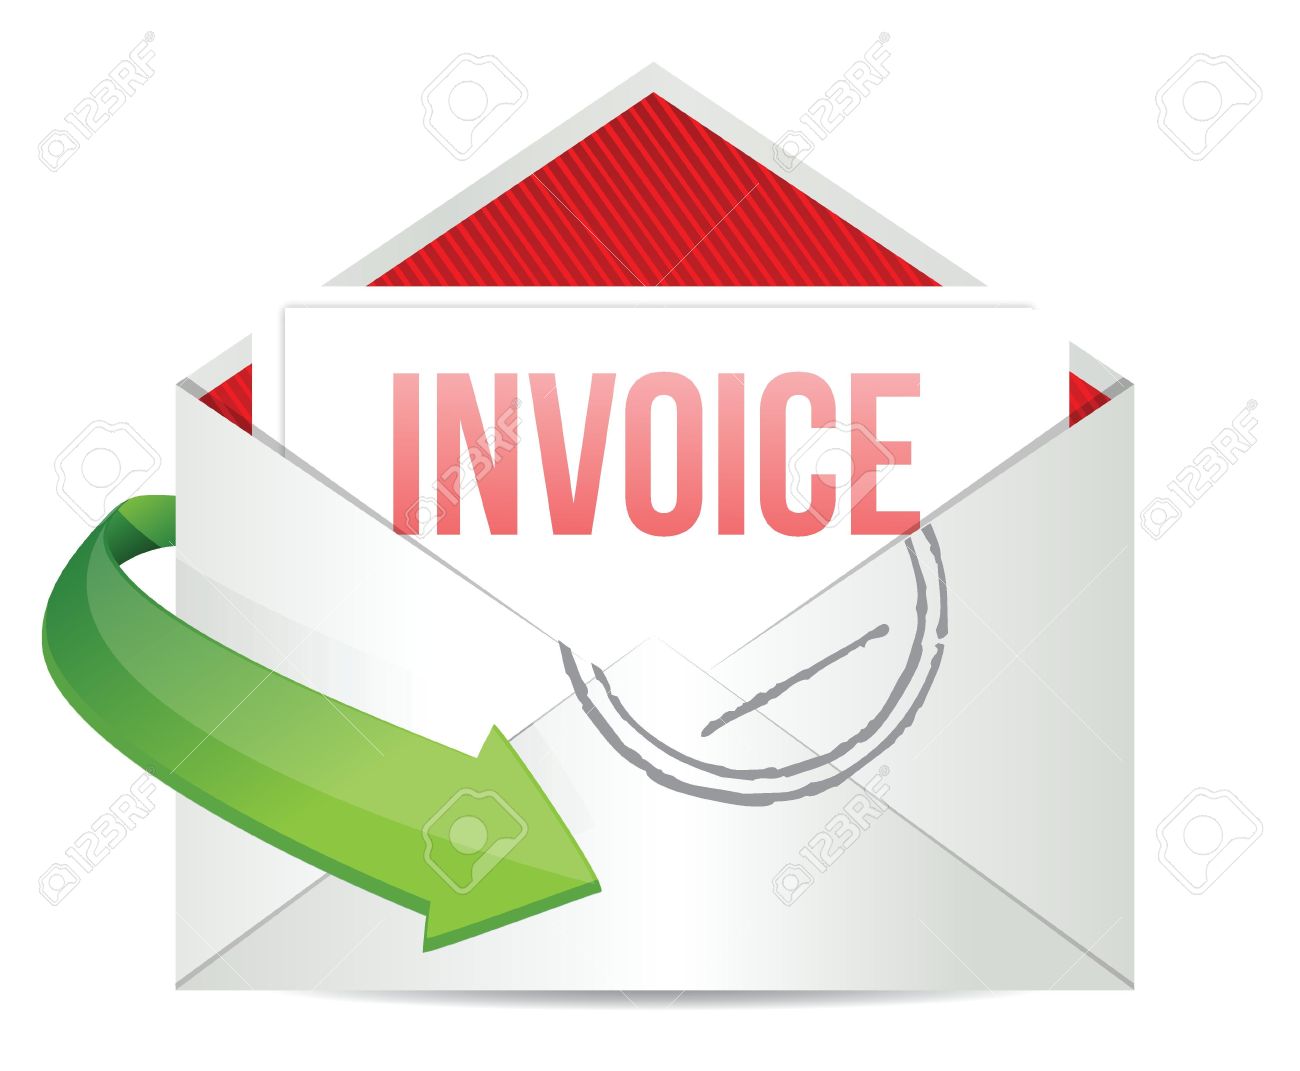 Invoice clipart - Clipground